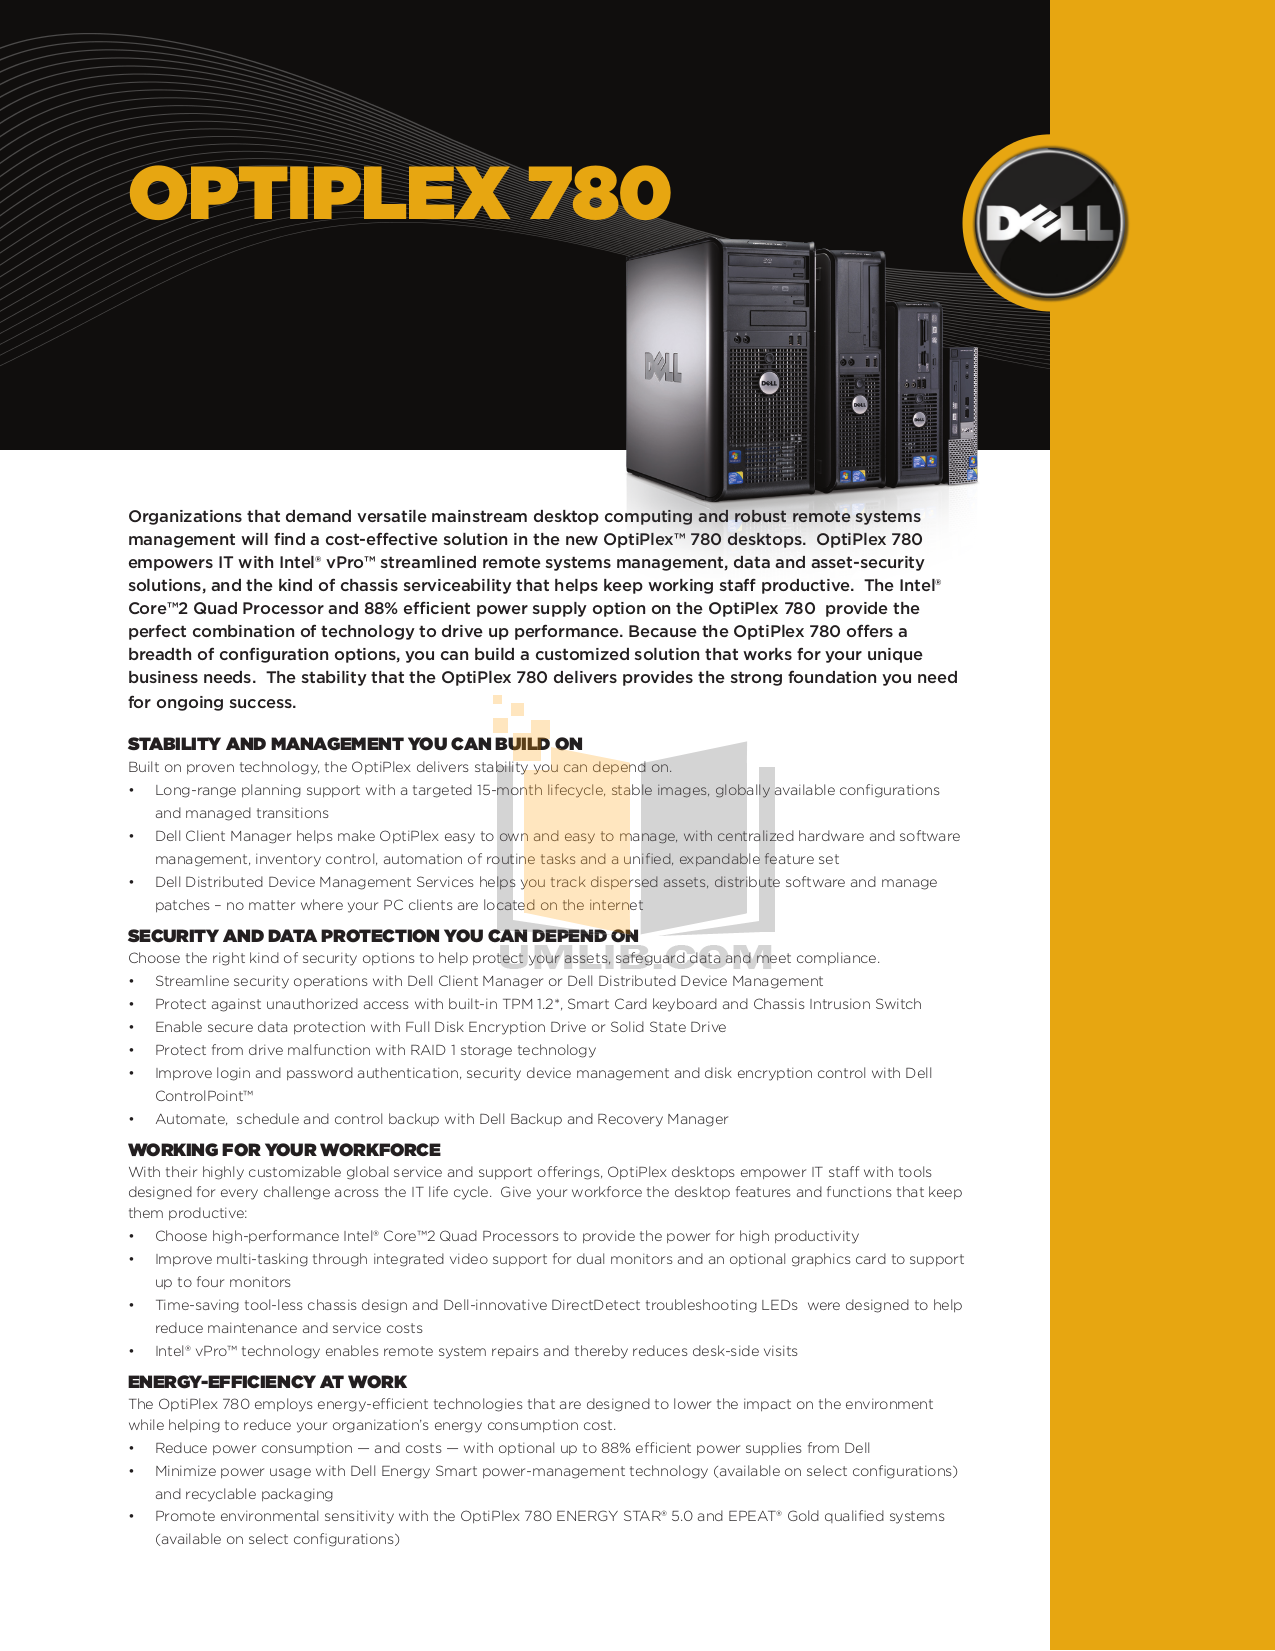 dell optiplex 780 manual pdf